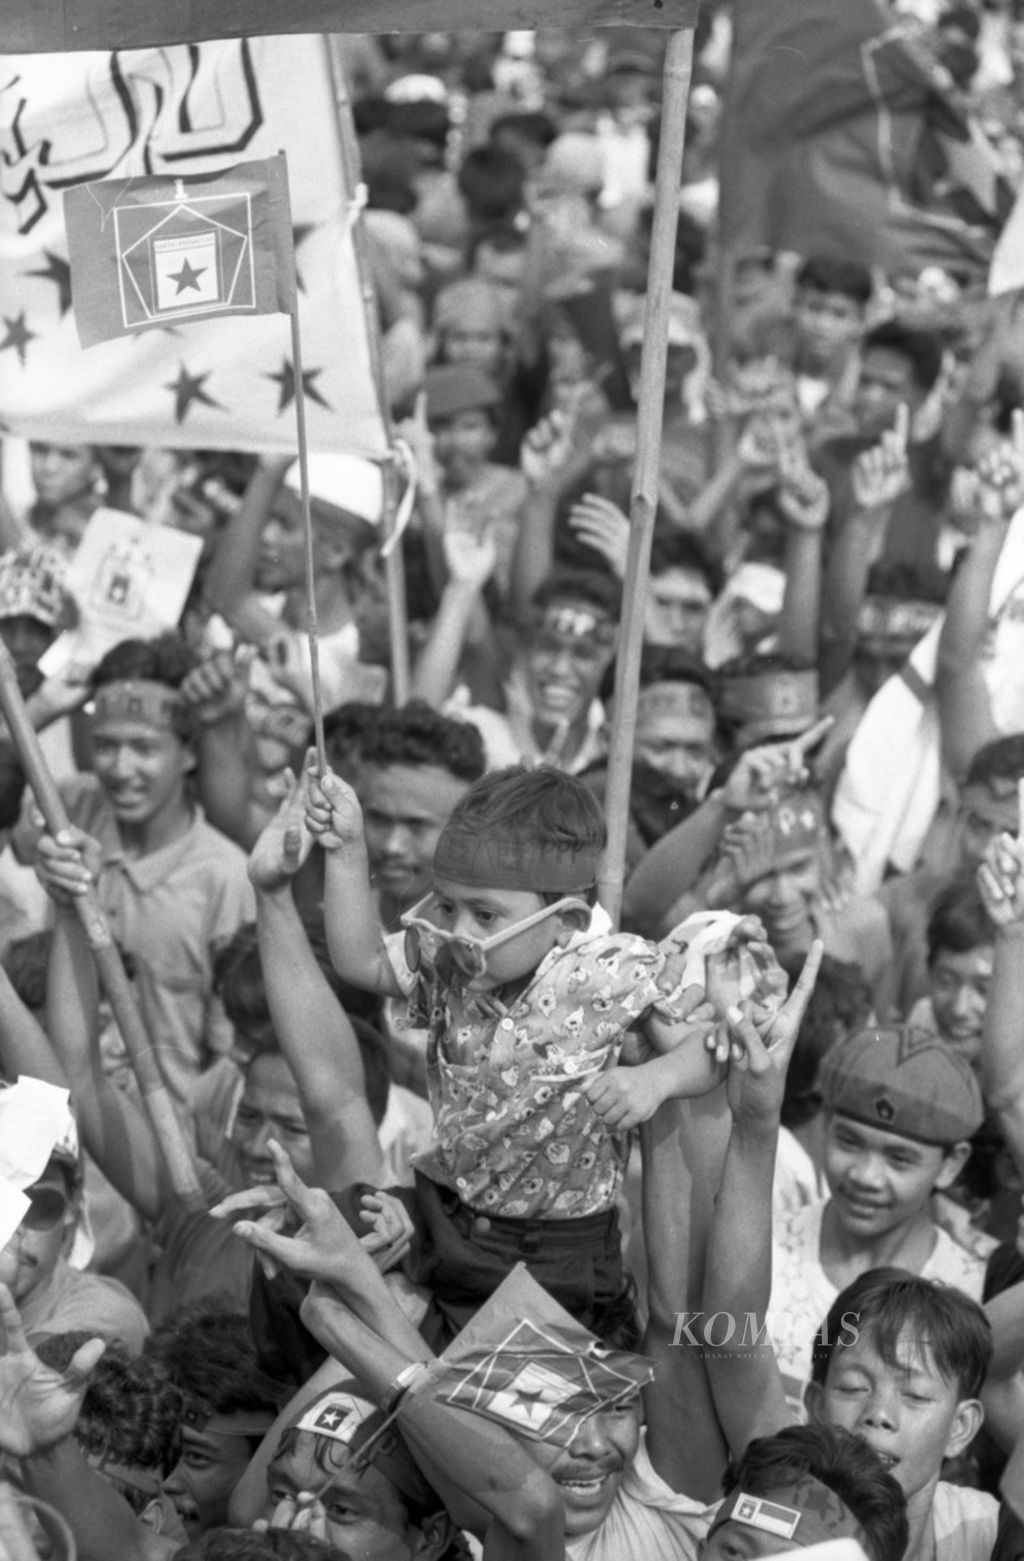 Putaran terakhir kampanye Partai Persatuan Pembangunan (PPP) di lapangan terbuka dipusatkan di Lapangan Parkir Timur Senayan, Jumat (29/5/1992). Sementara itu, masih banyak massa pendukung PPP lainnya yang bergerak di Jalan Jenderal Sudirman, Jakarta Pusat. Anak-anak kecil juga ikut kampanye. 